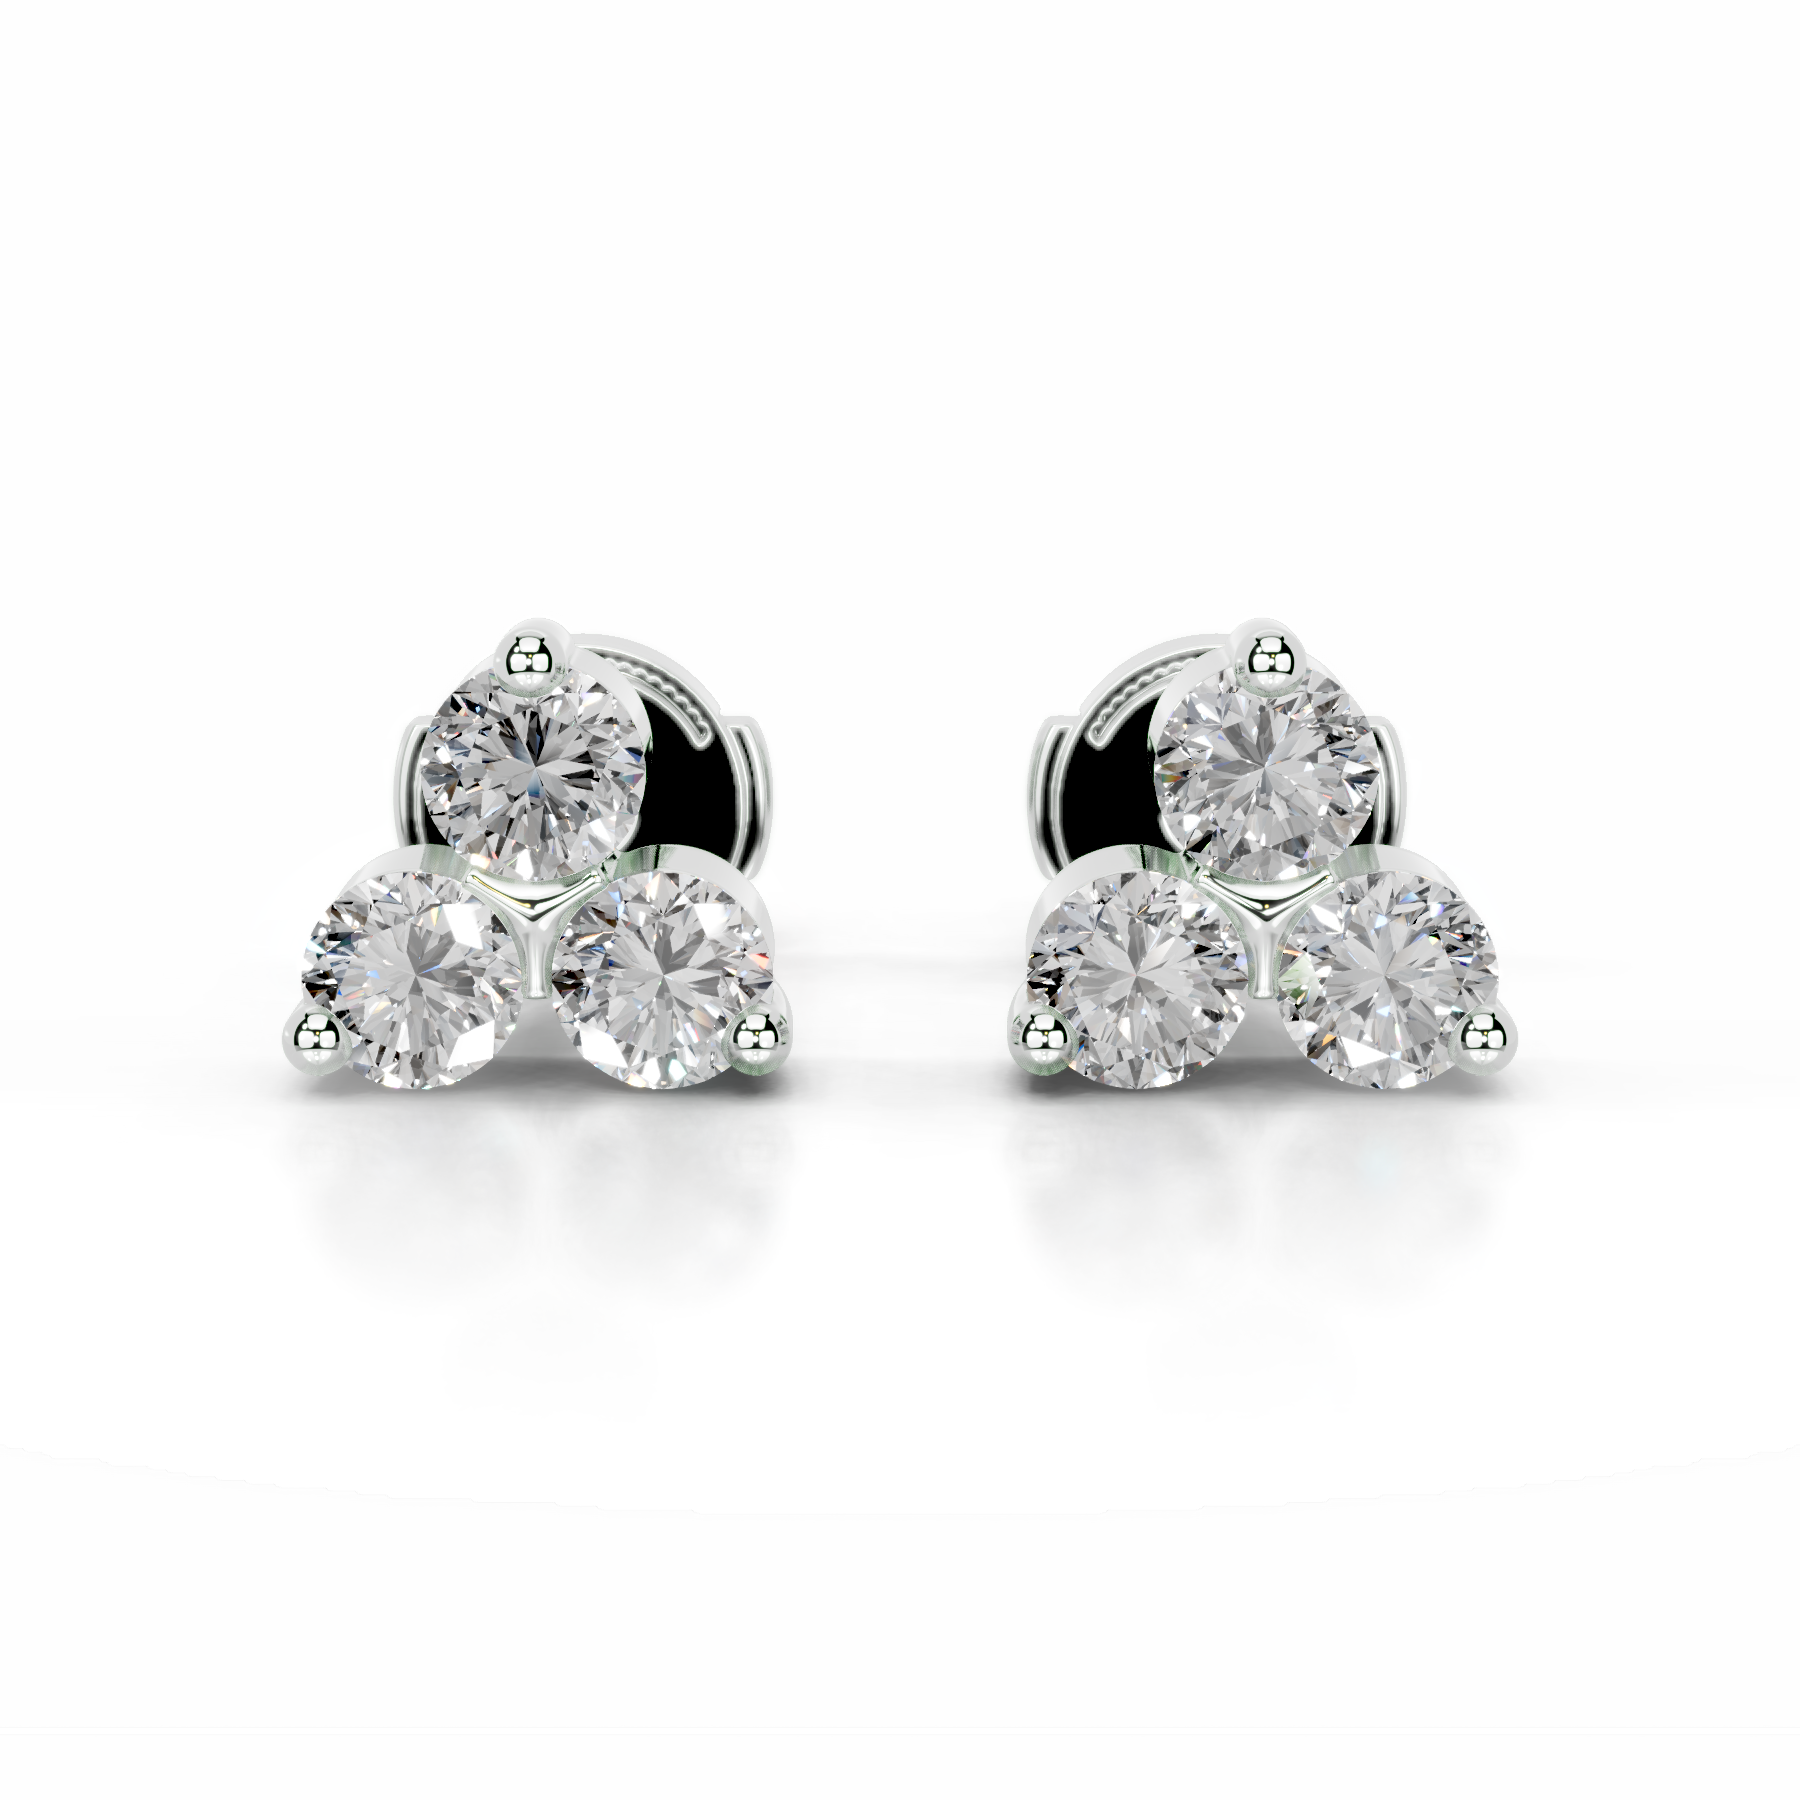 Judy Diamond Studs Earrings   (0.60 Carat) -14K White Gold